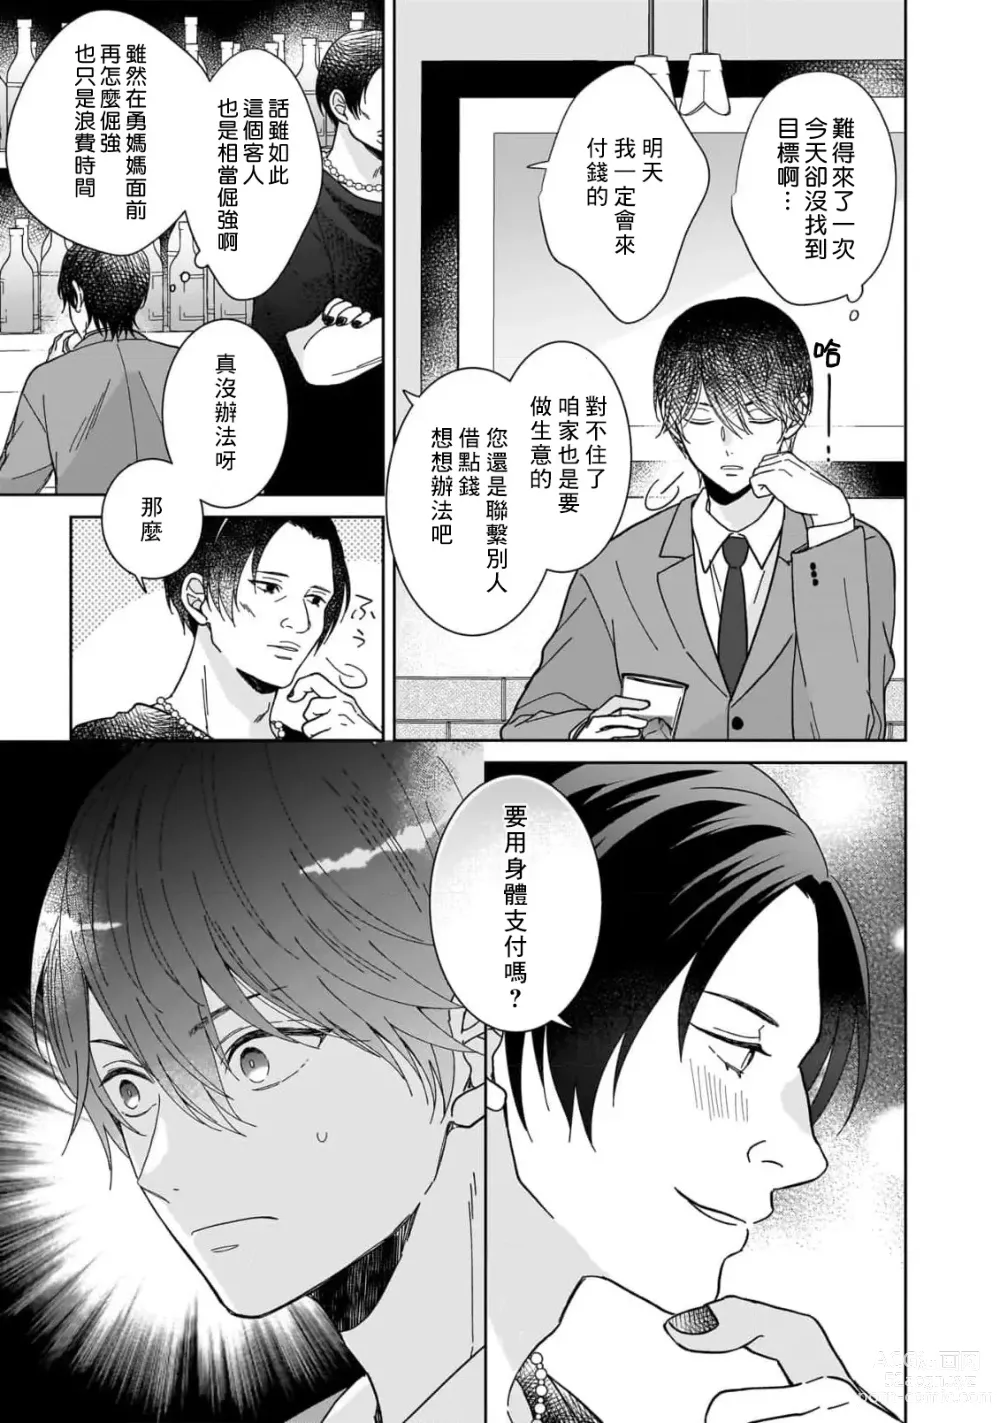 Page 5 of manga 下雨天有些许忧郁 1